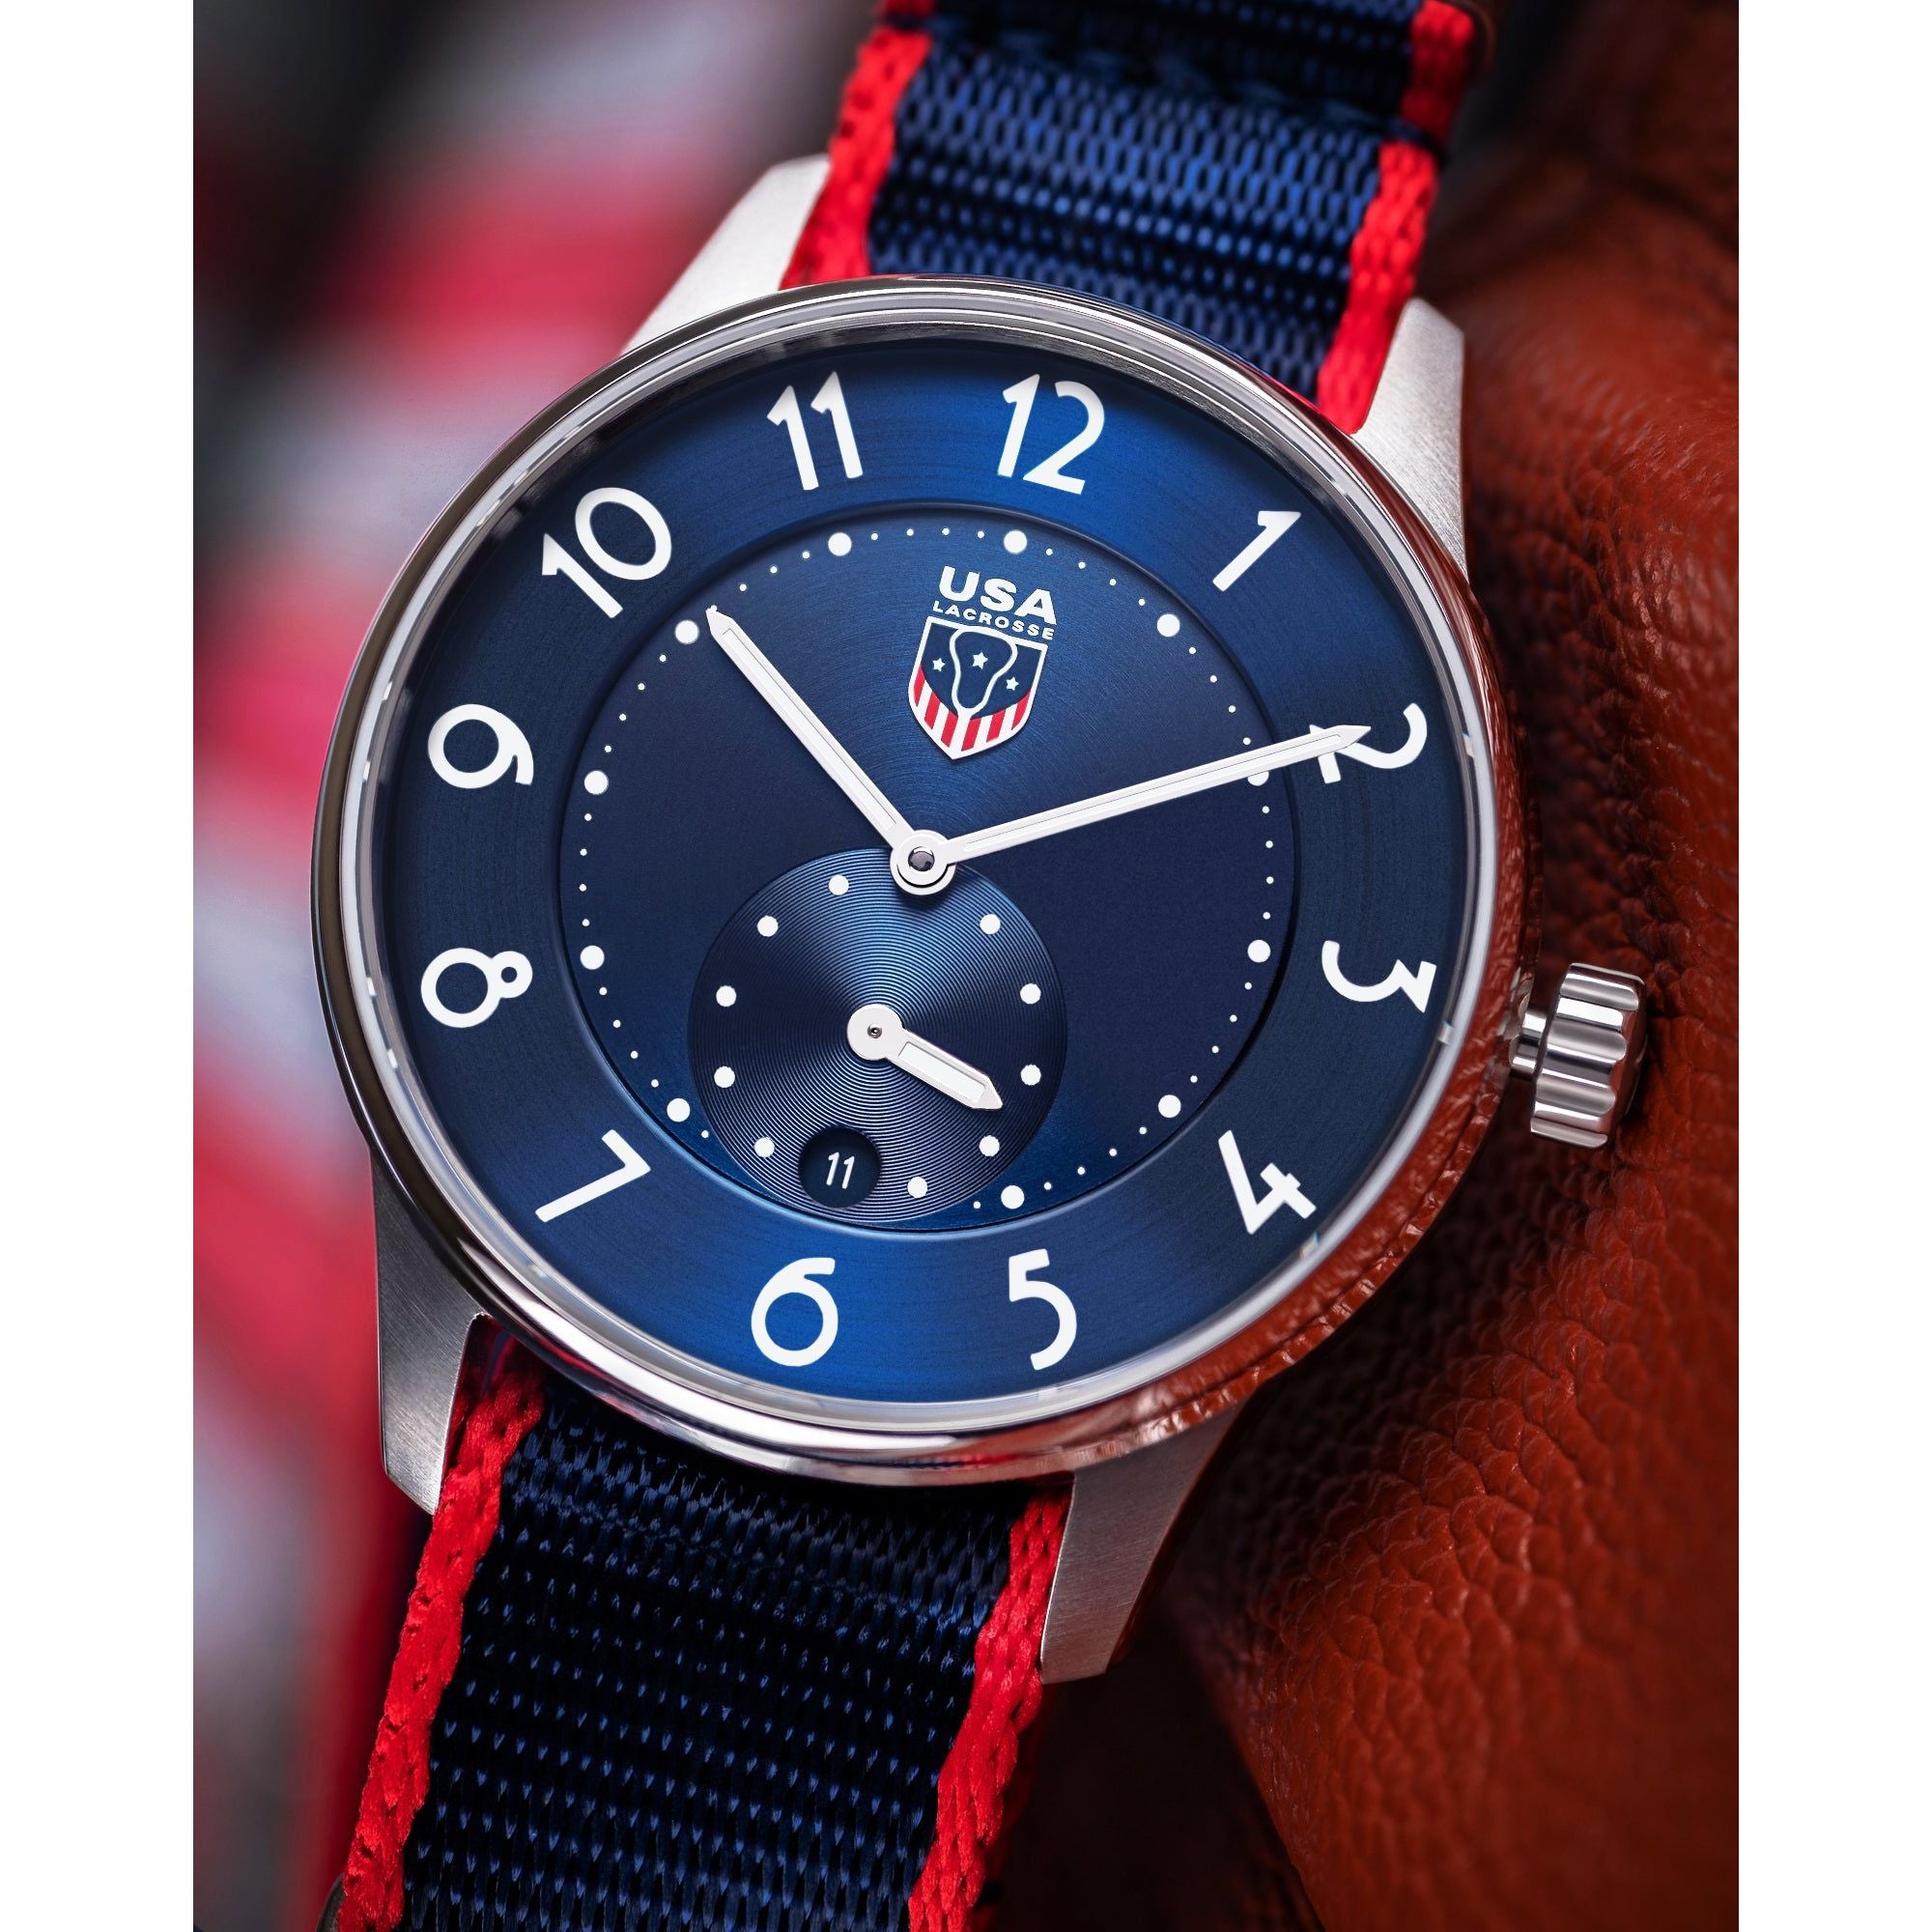 USA Lacrosse Timepiece